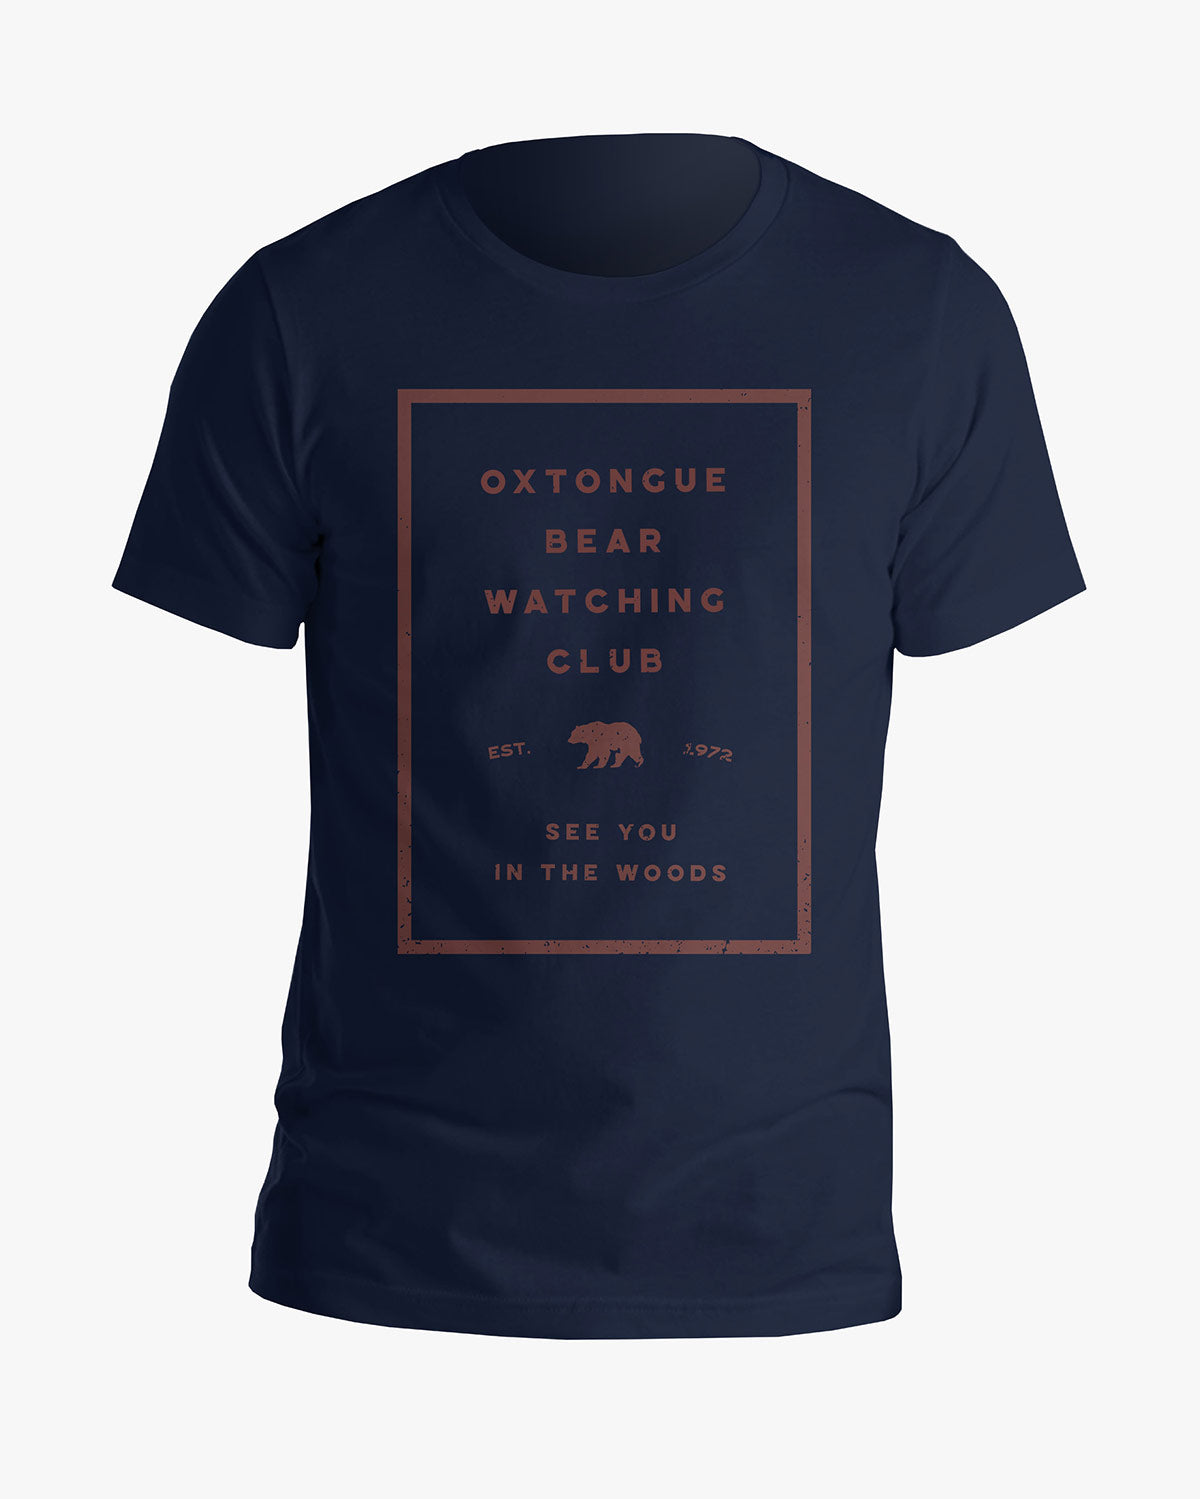 Bear Watching Club - Oxtongue Lake - Tee